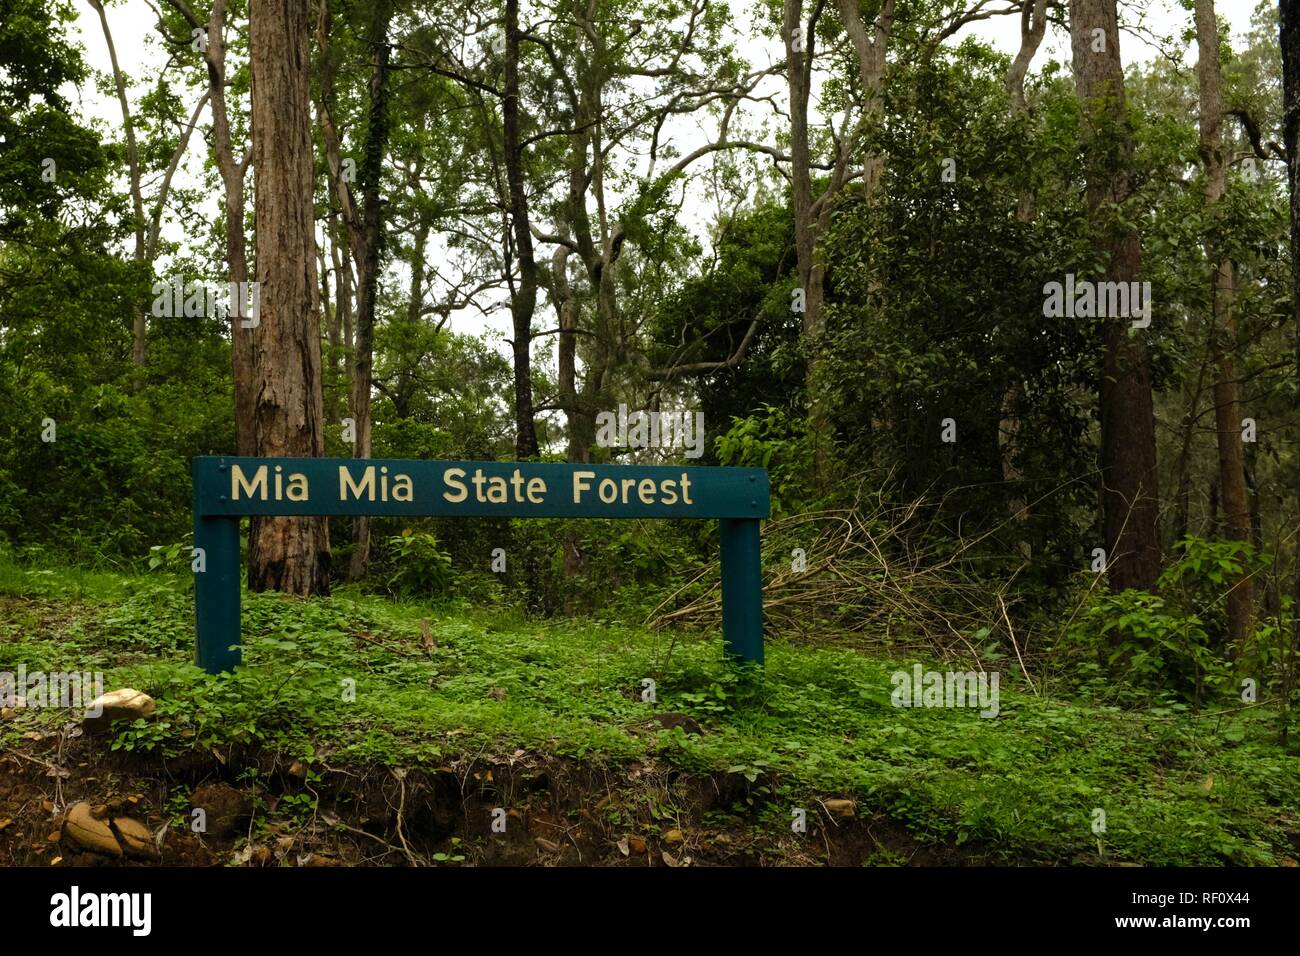 Mia Mia state forest sign, Mia Mia State Forest, Queensland, Australia Stock Photo